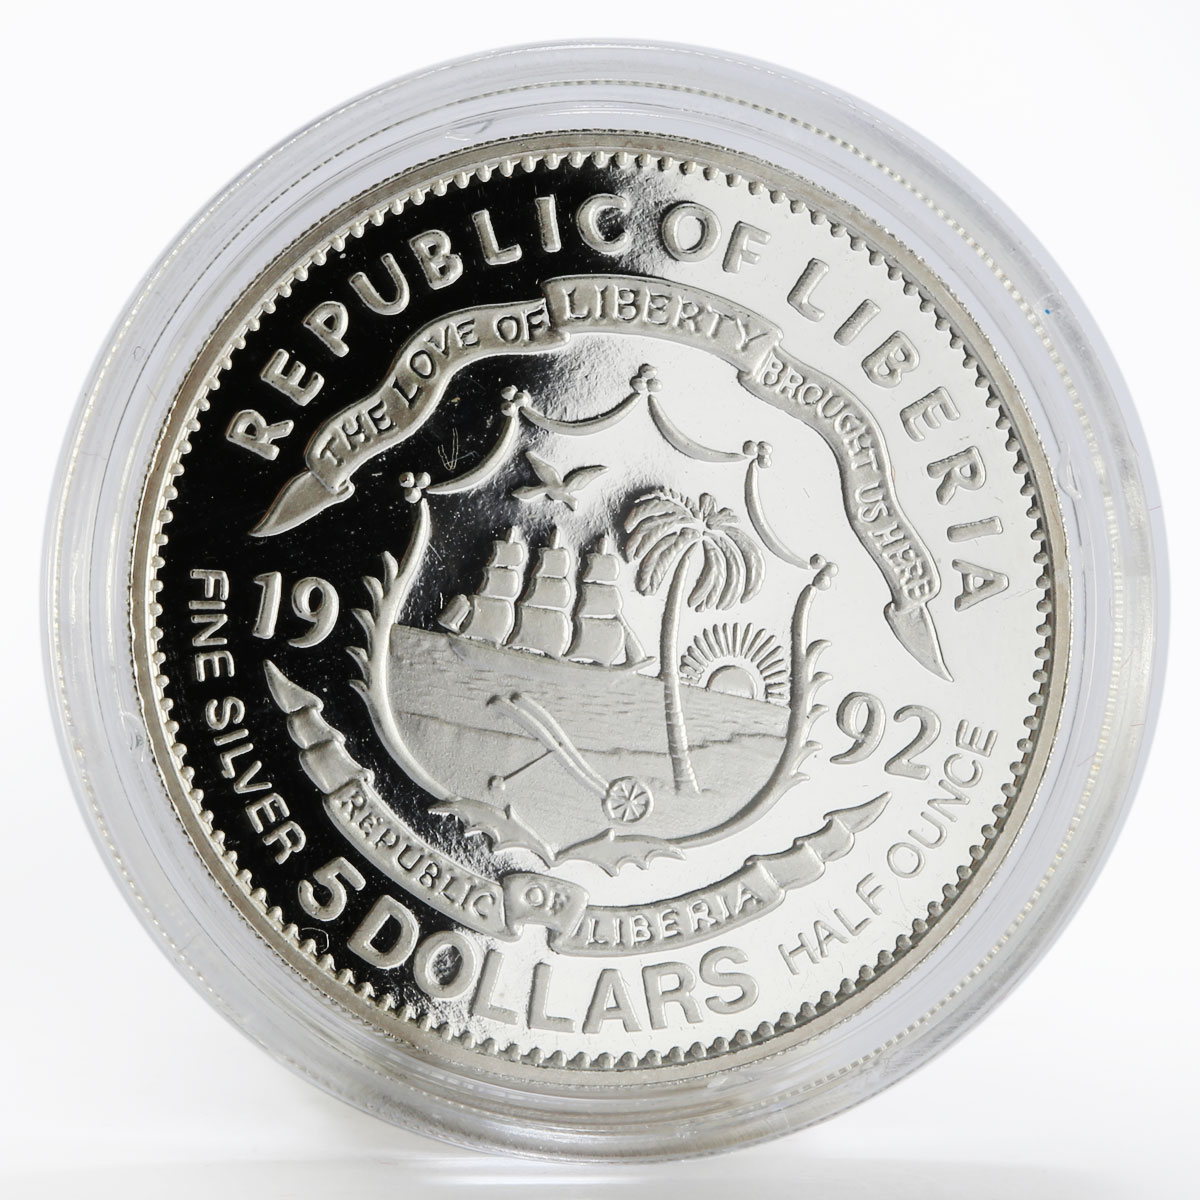 Liberia 5 dollars Formule One series Ayrton Senna proof silver coin 1992